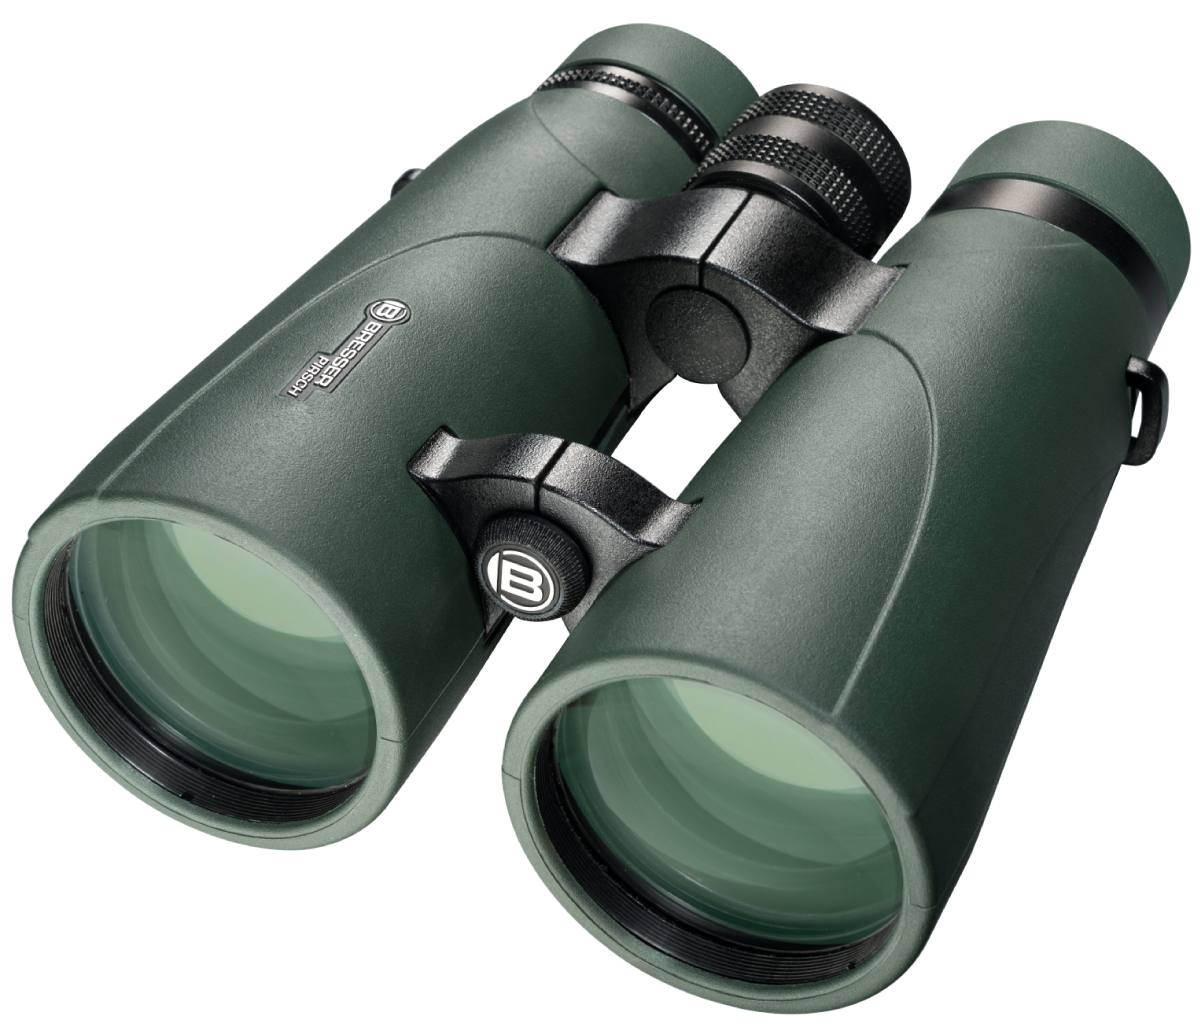 Bresser hunter 16x50 binoculars review